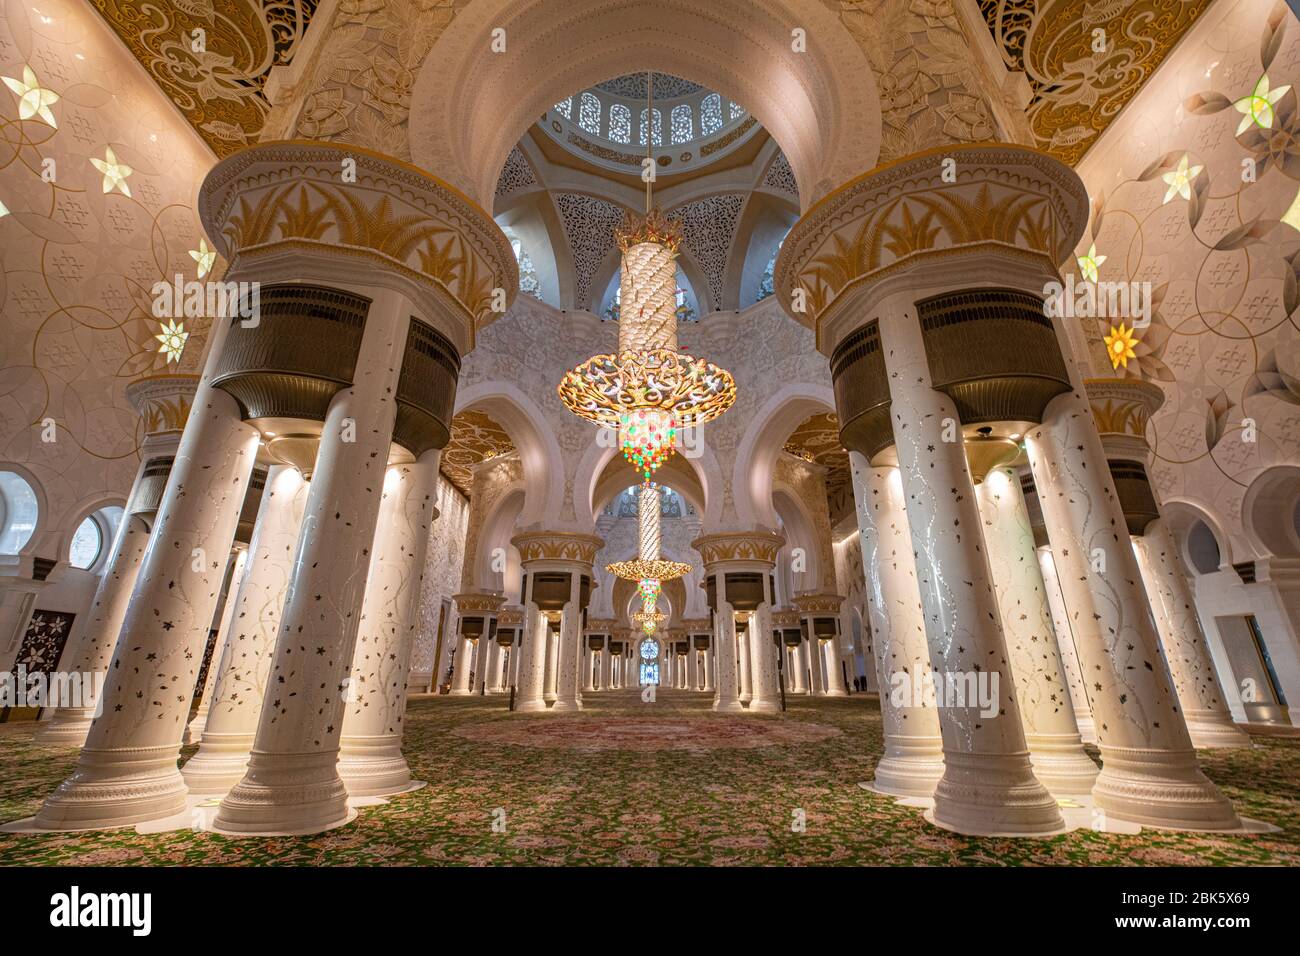 Main prayer hall of Sheikh Zayed Grand Mosque in Abu Dhabi, United Arab Emirates Stock Photo